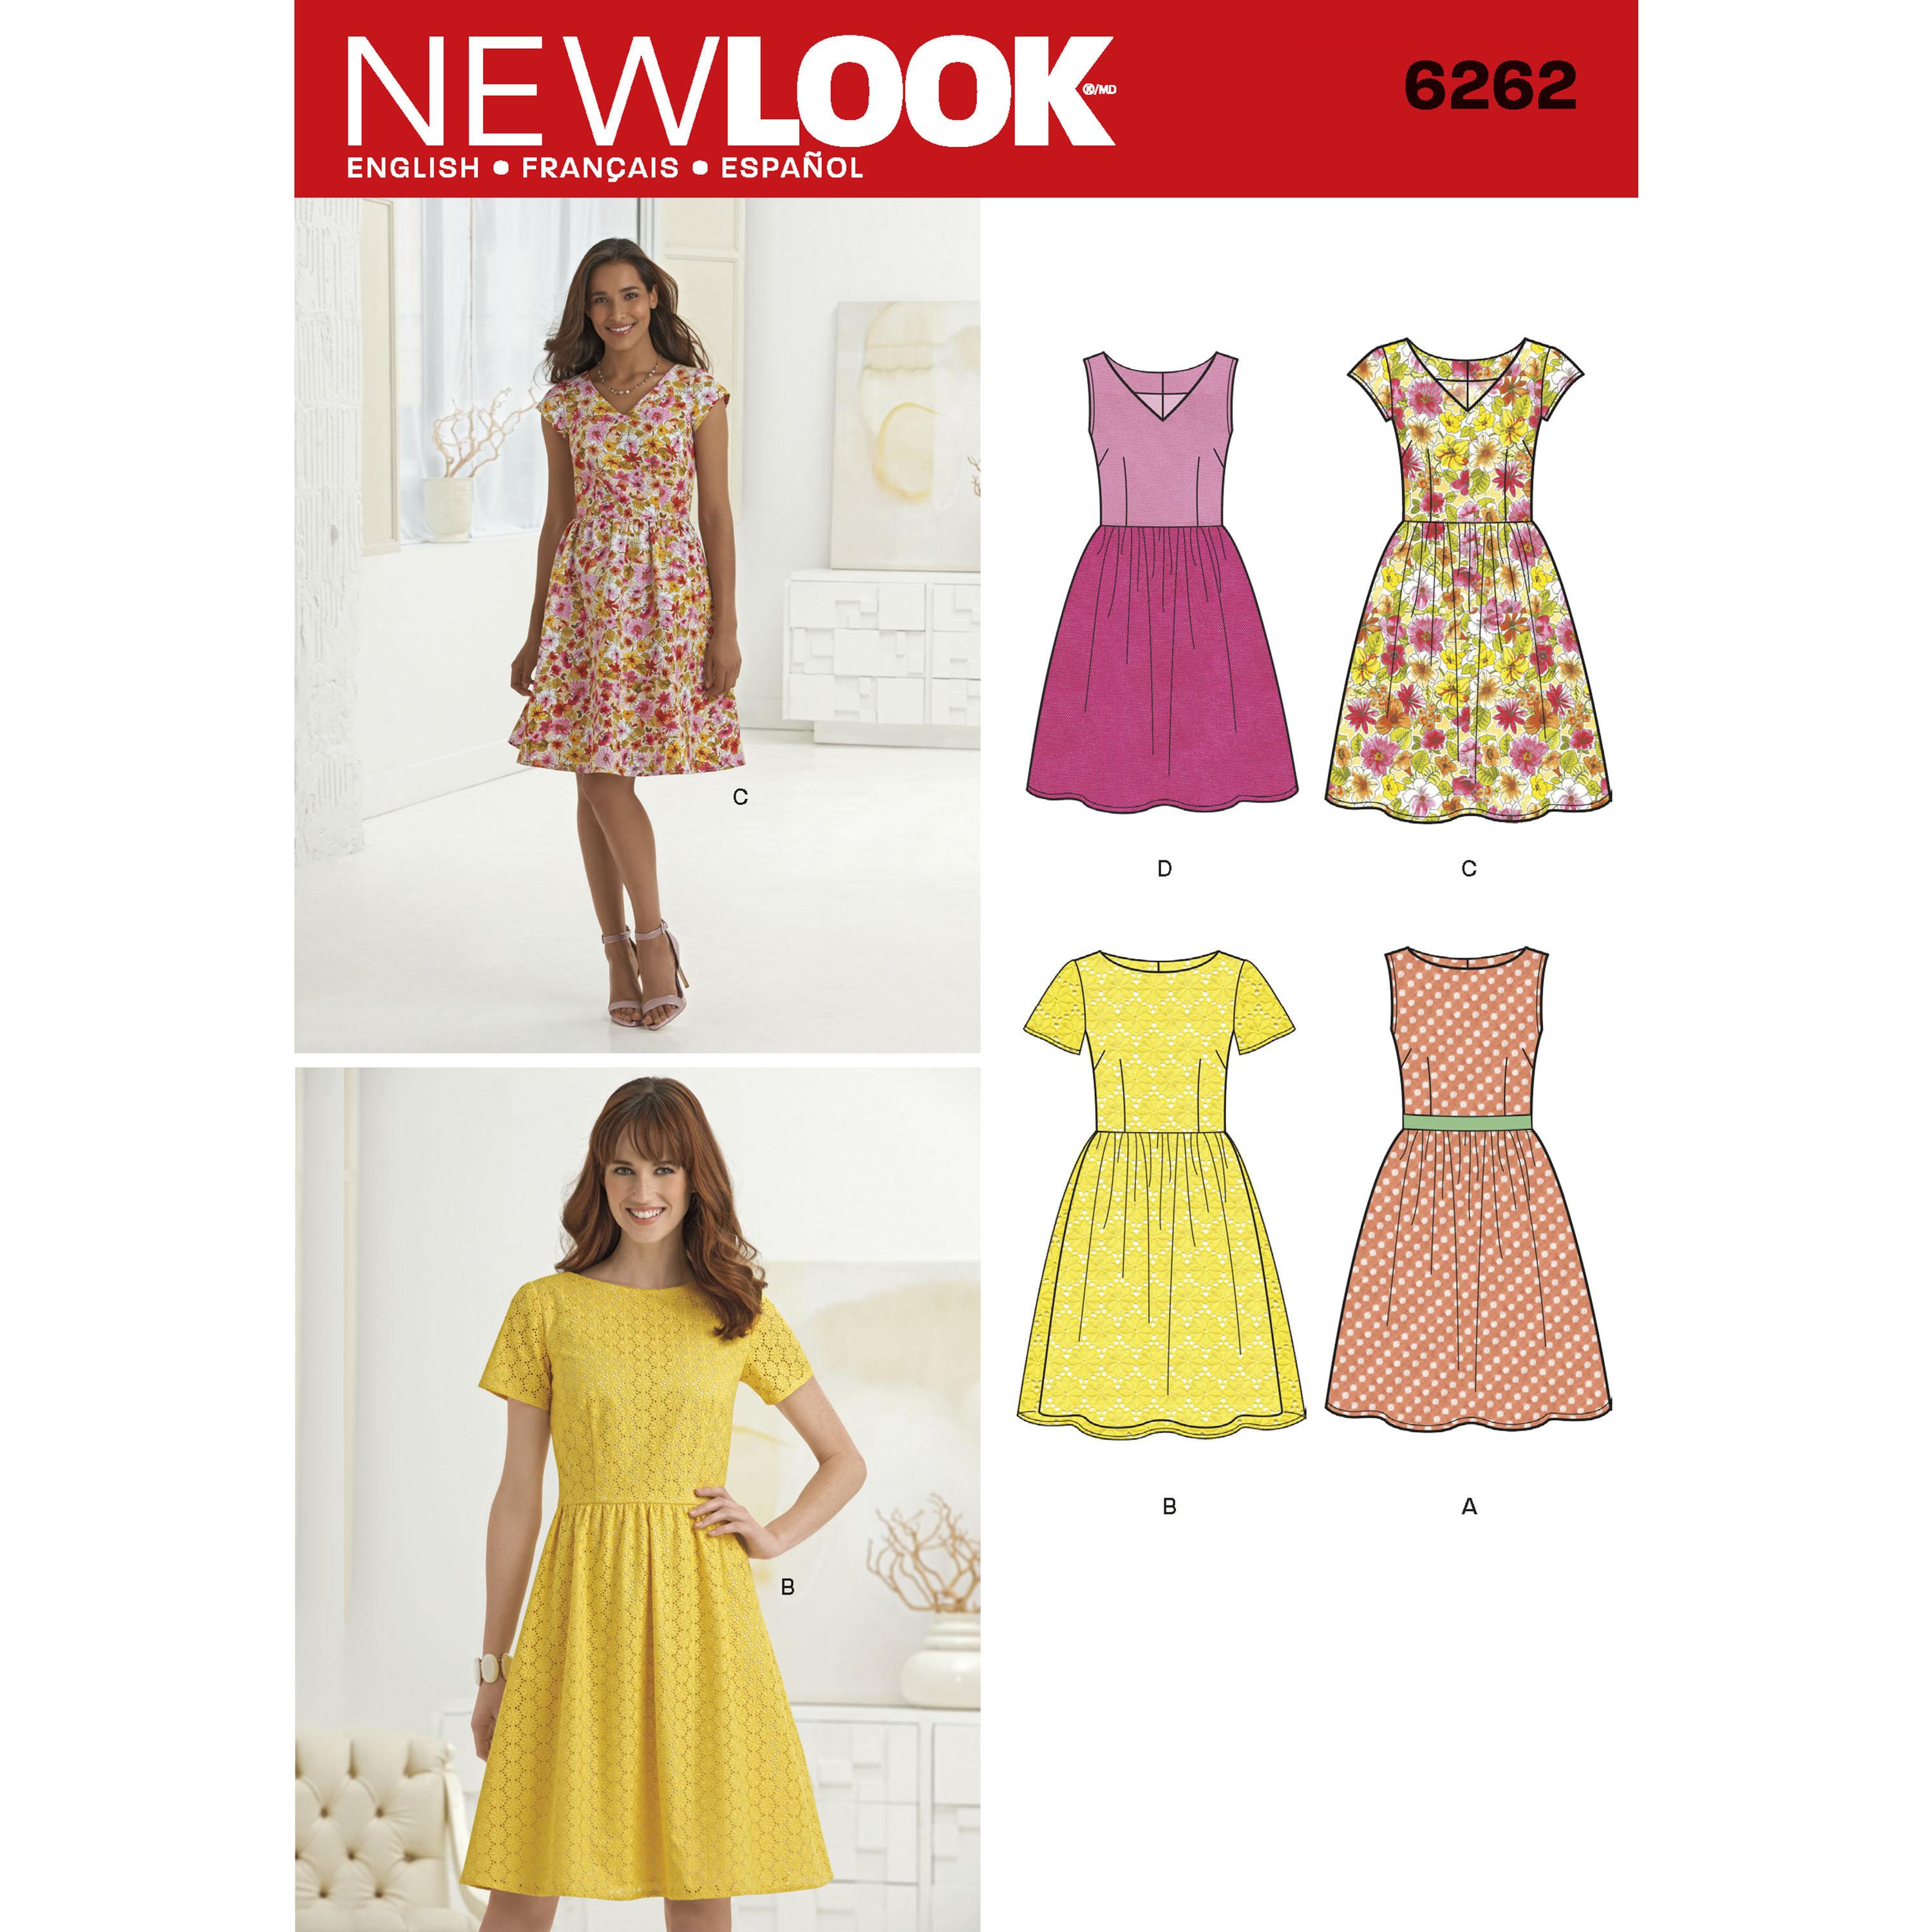 NewLook N6262 Misses' Dress with Neckline Variations